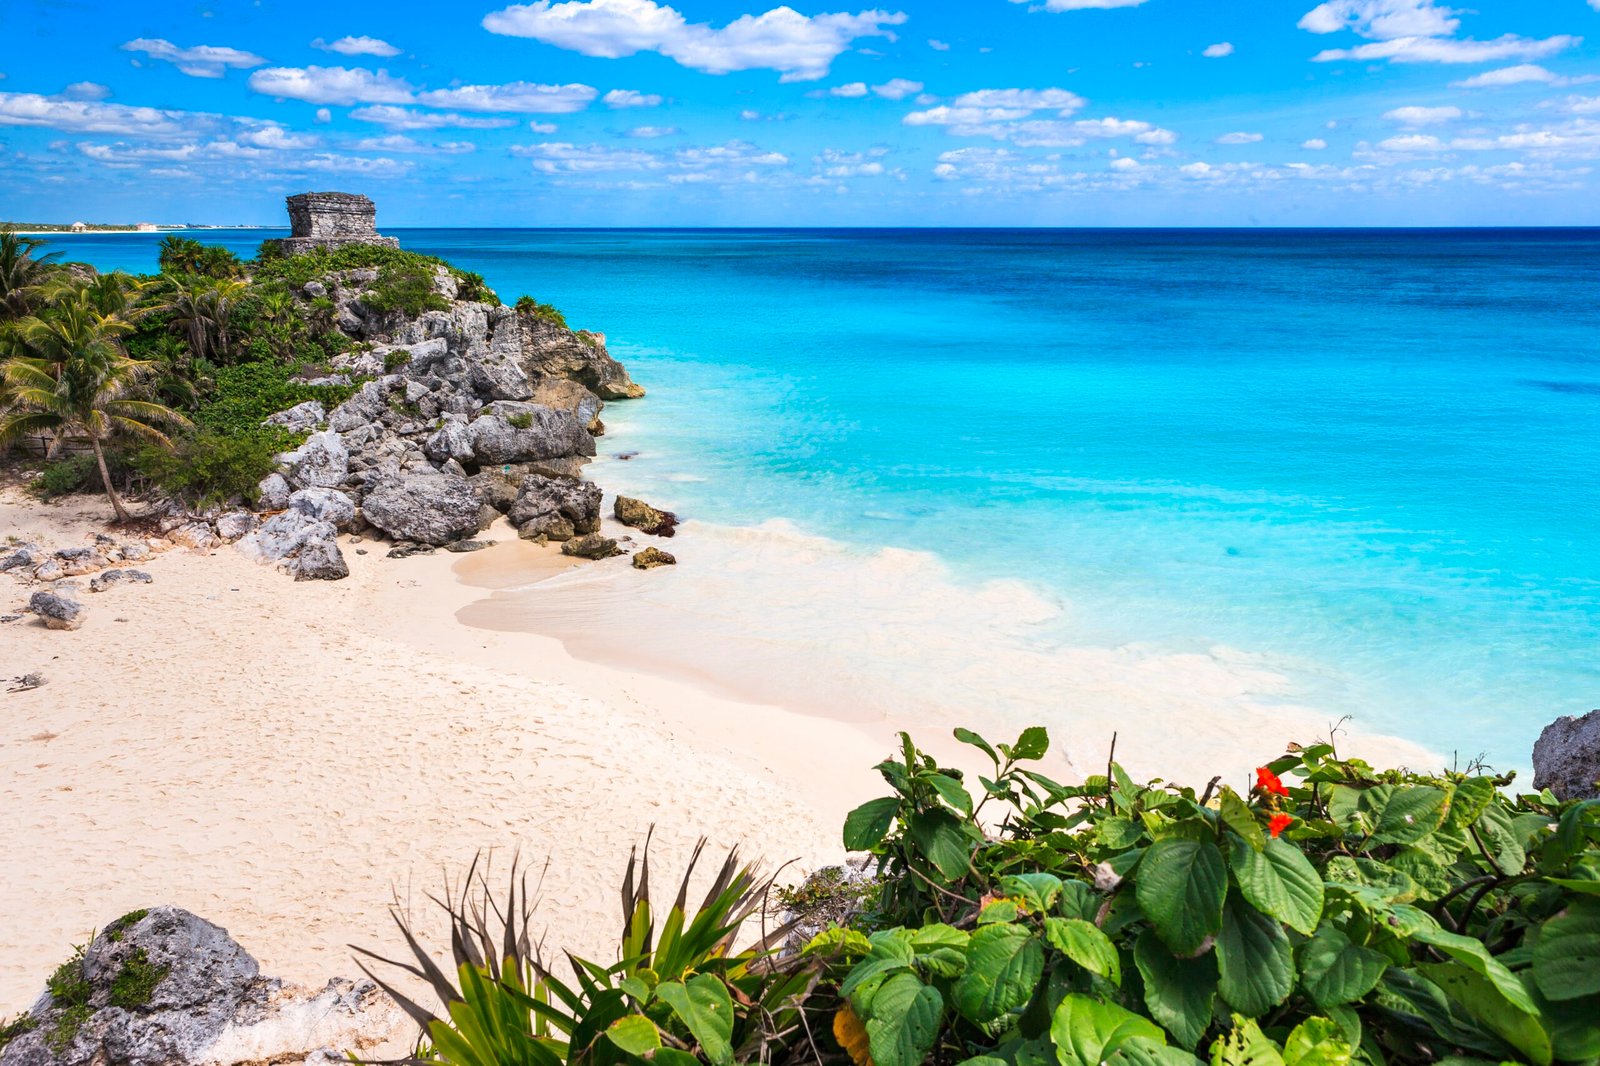 Tulum Ruins and Beach on Caribbean Sea, Riviera Maya, Mexico